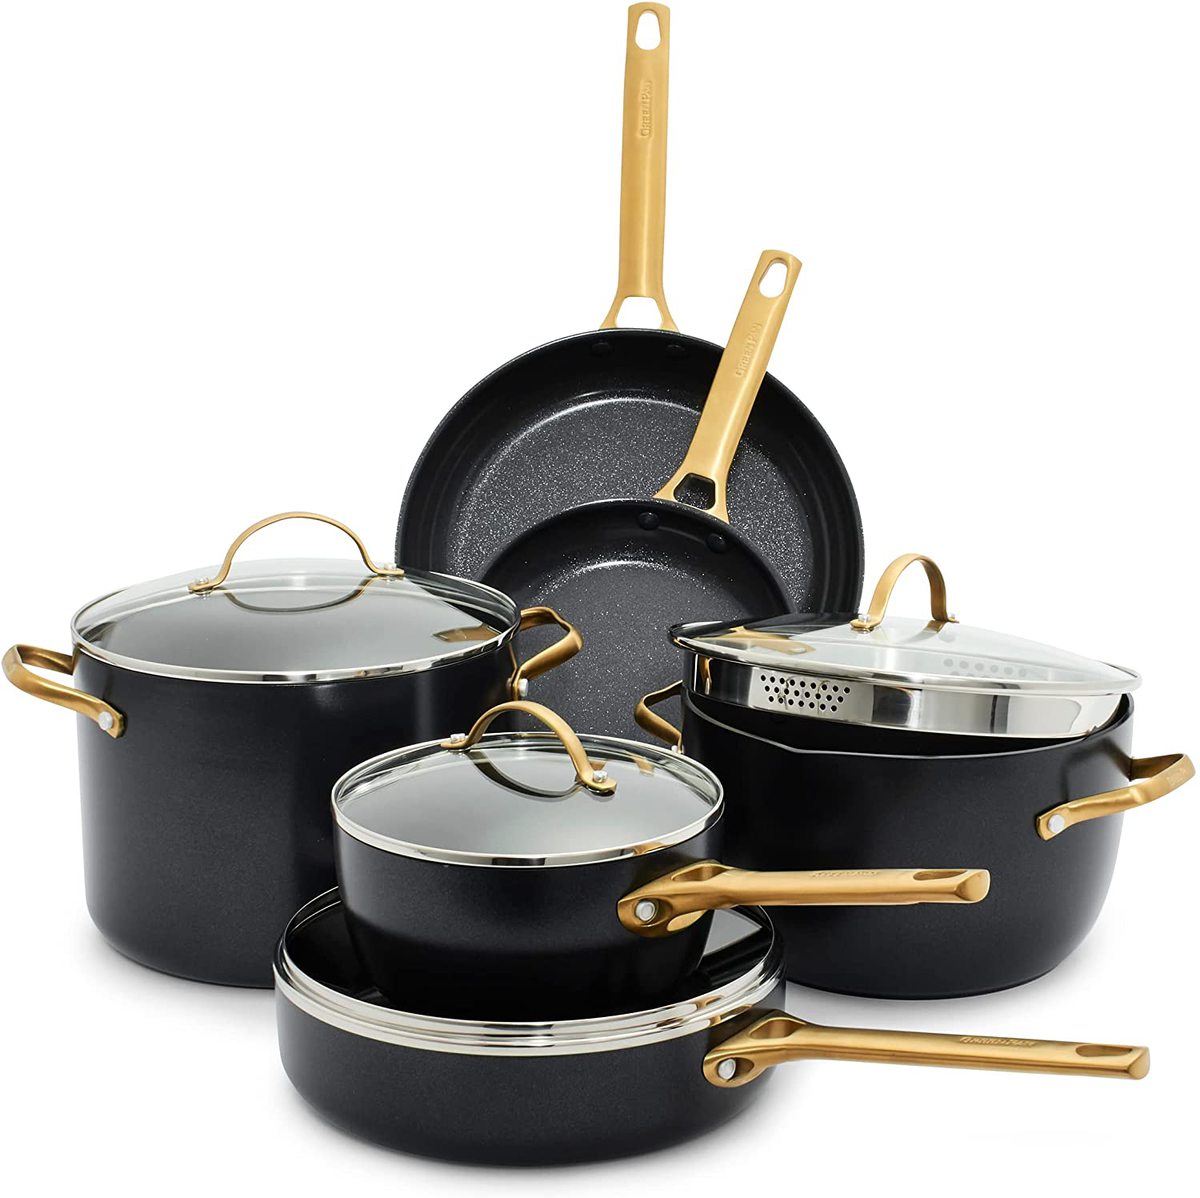 Black and gold ceramic nonstick cookware set